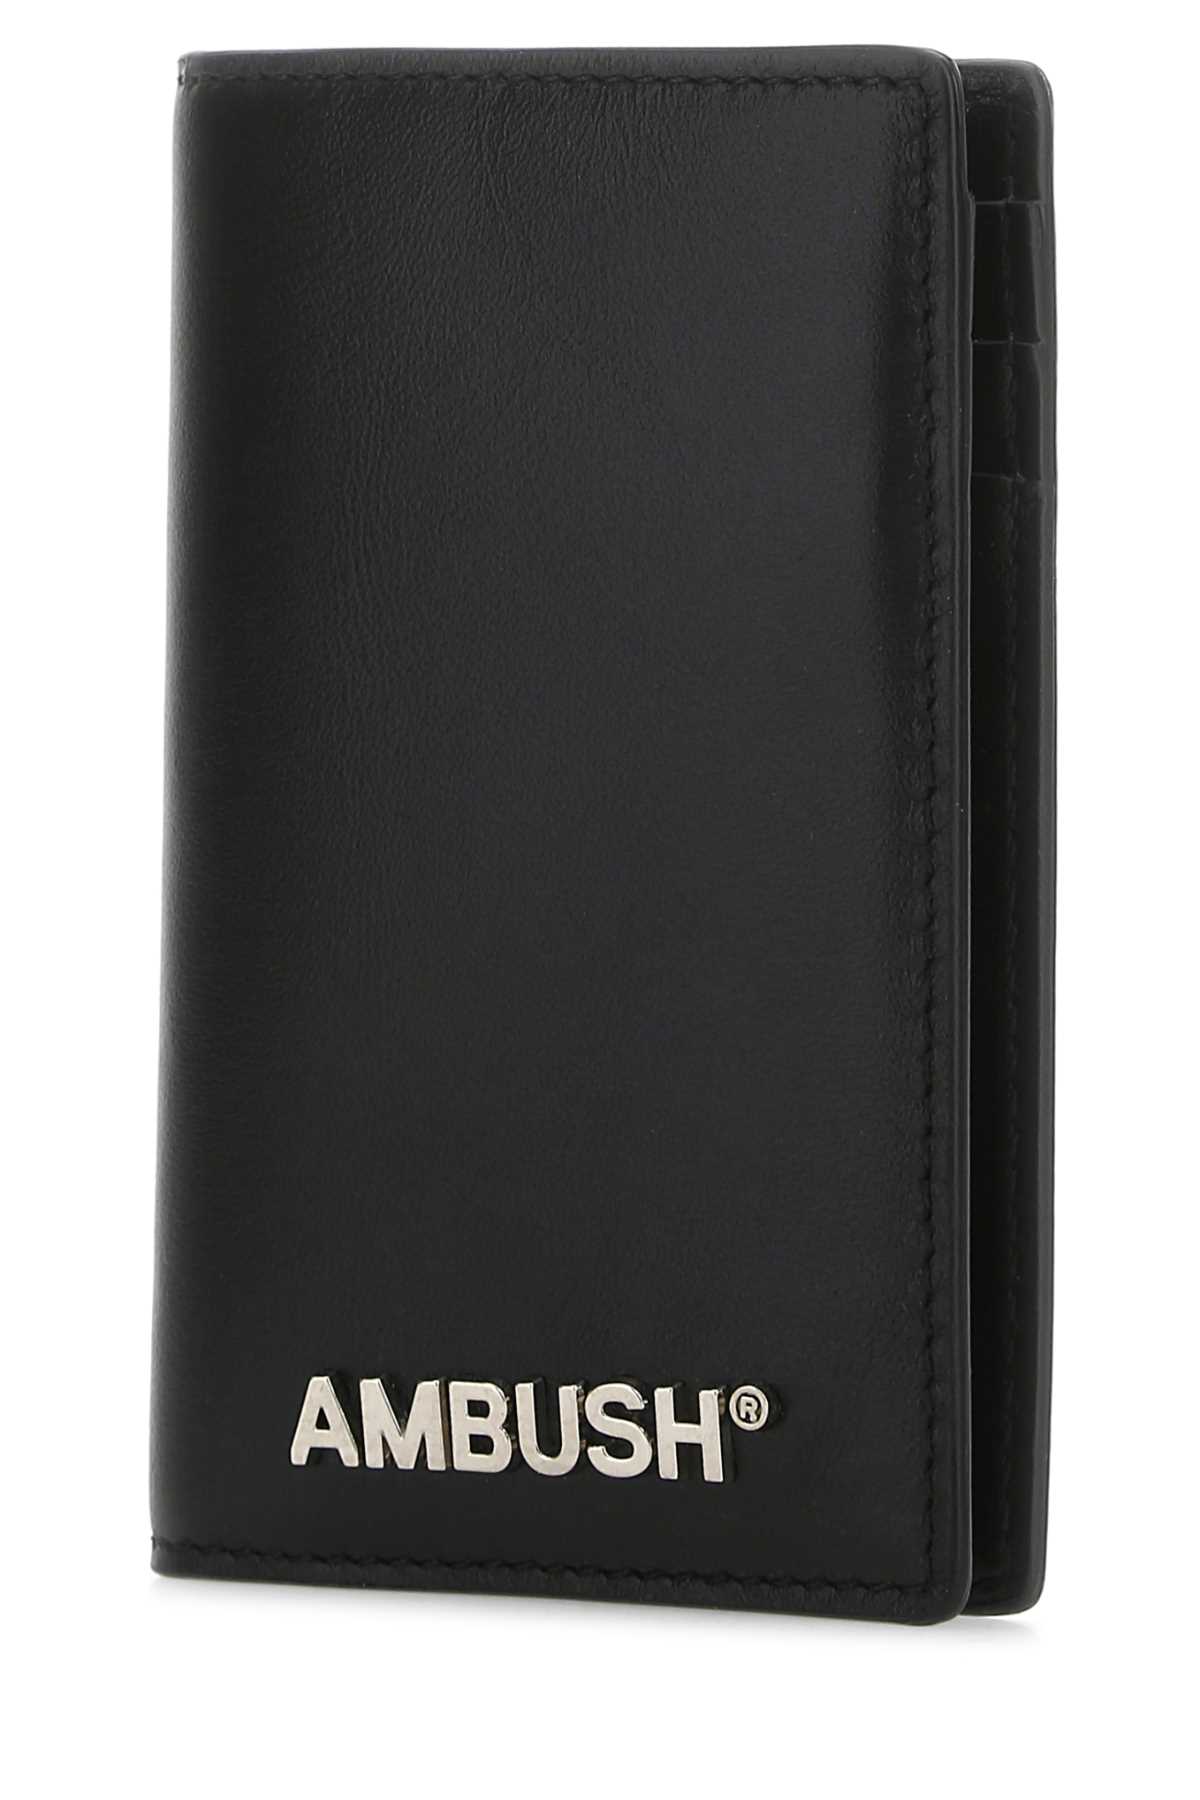 Ambush Black Leather Card Holder